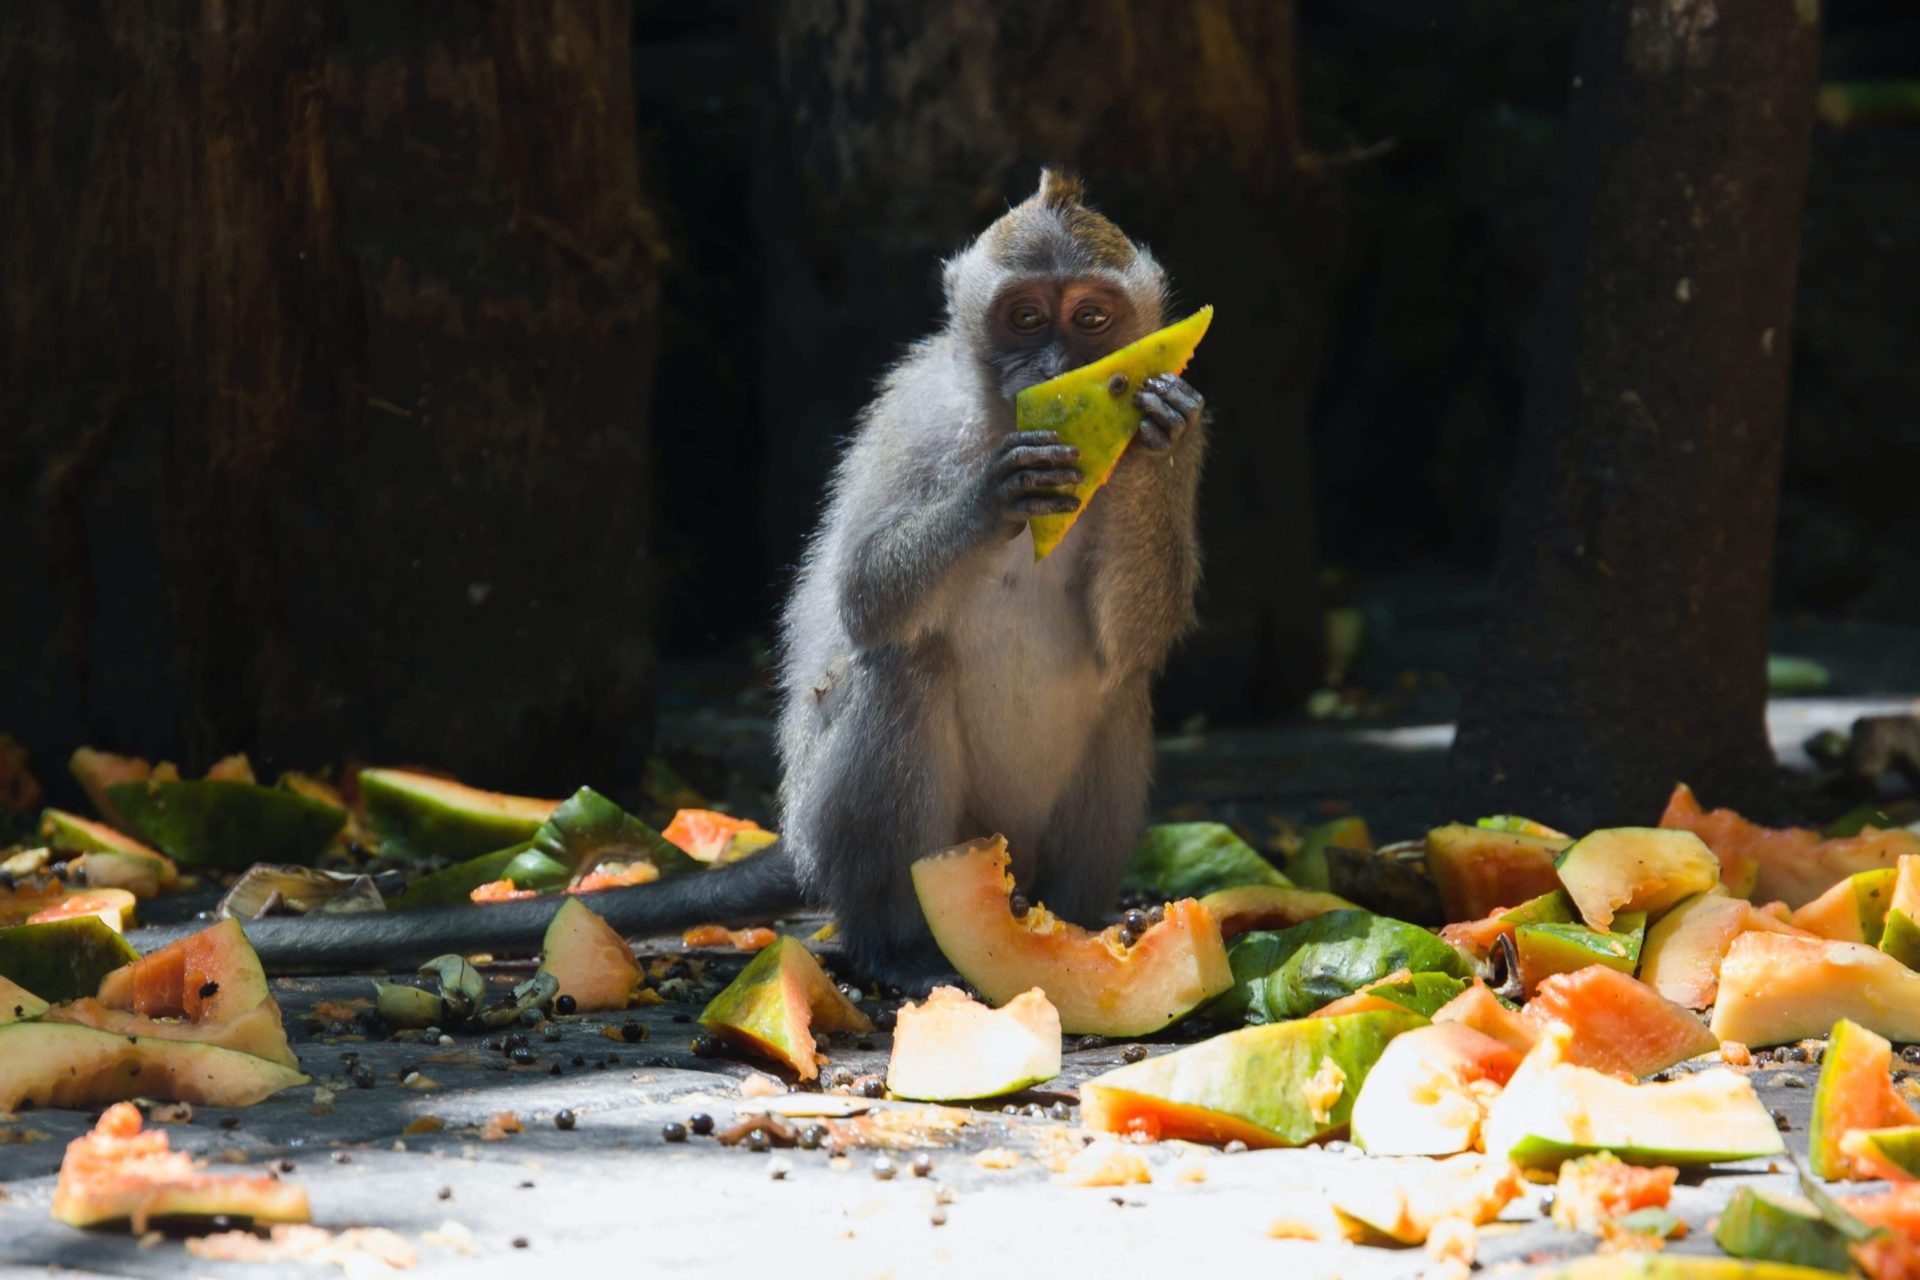 Sitting monkey eating Melon